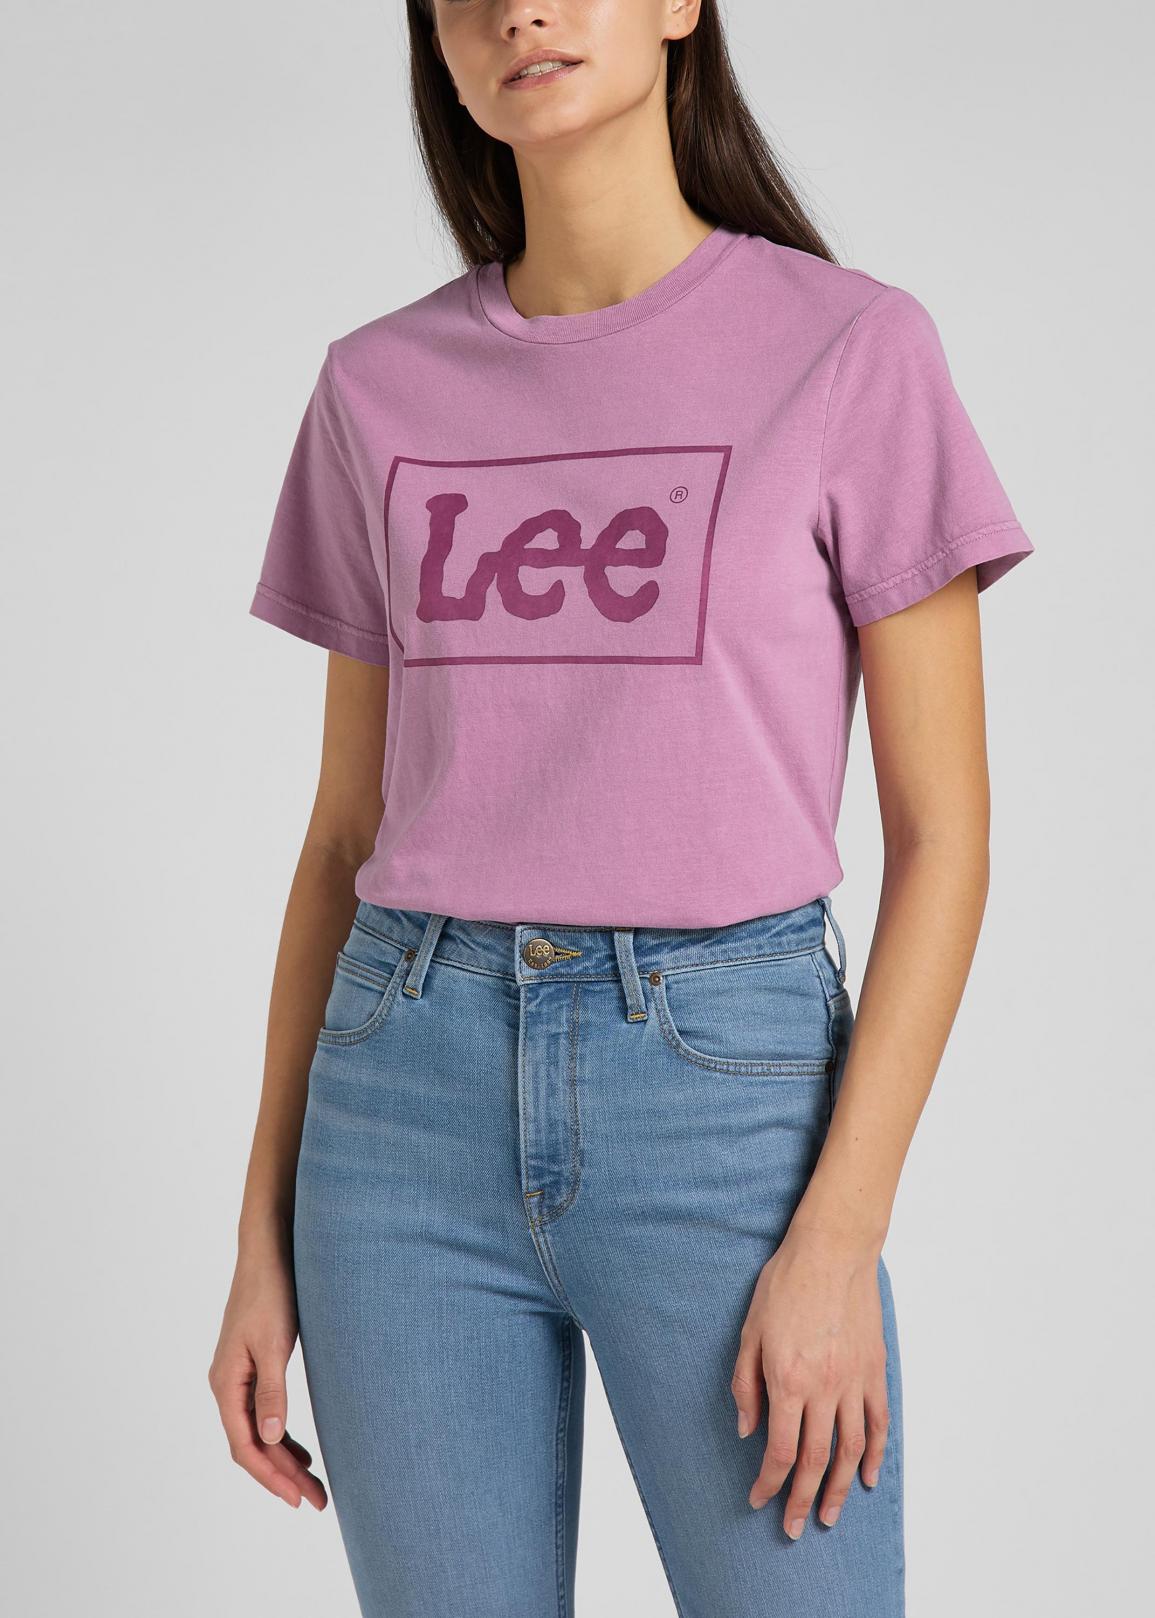 Lee® Short Sleeve Graphic Tee - Plum